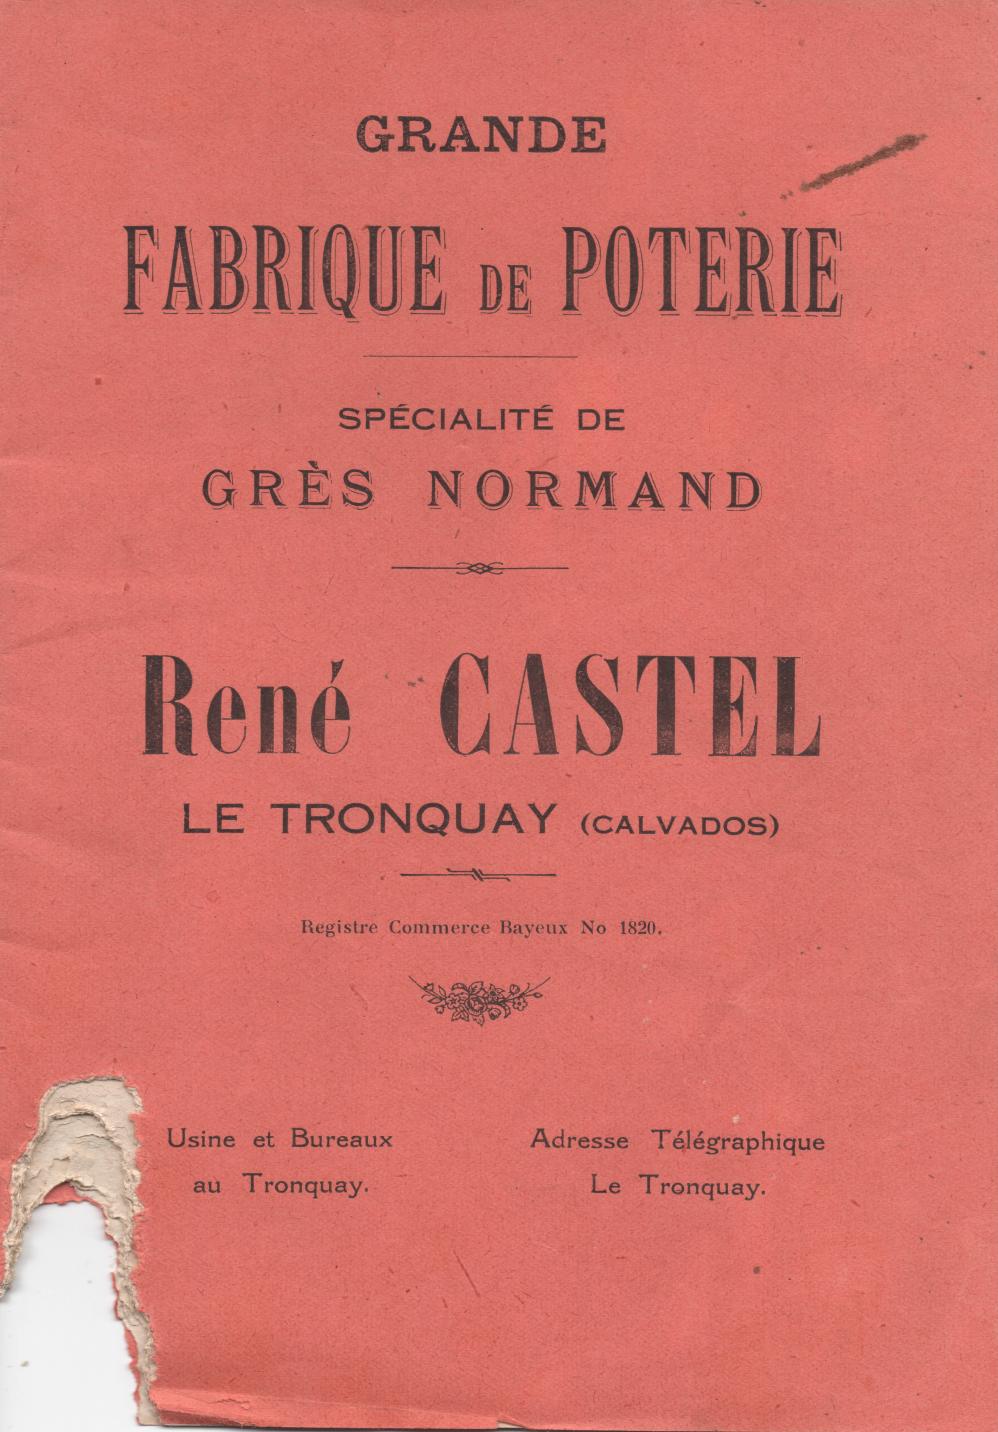 Catalogue de vente René Castel au Tronquay, vers 1930